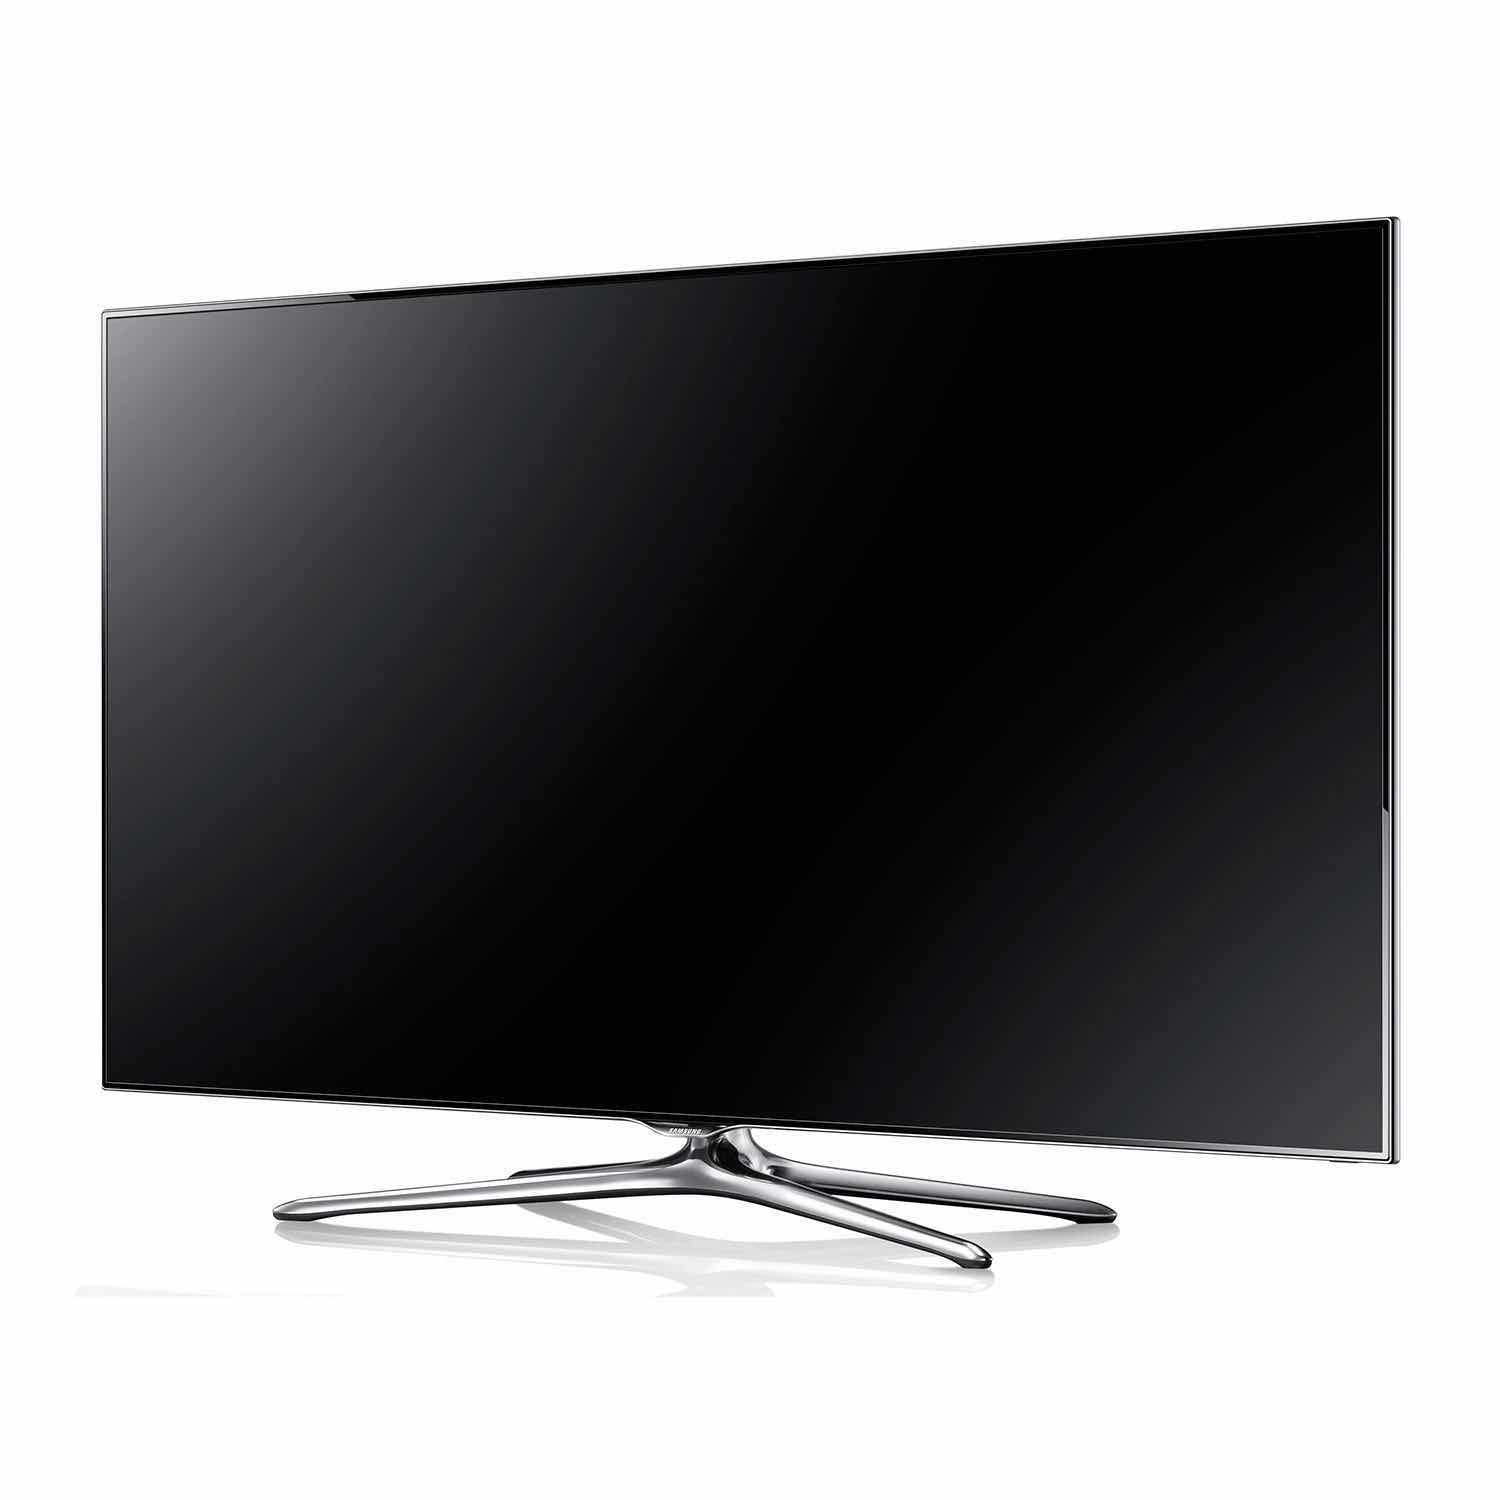 Photo 2 of SAMSUNG 65" CLASS 1080p 3D LED SMART HDTV W SWIVEL STAND MODEL UN65F7050A